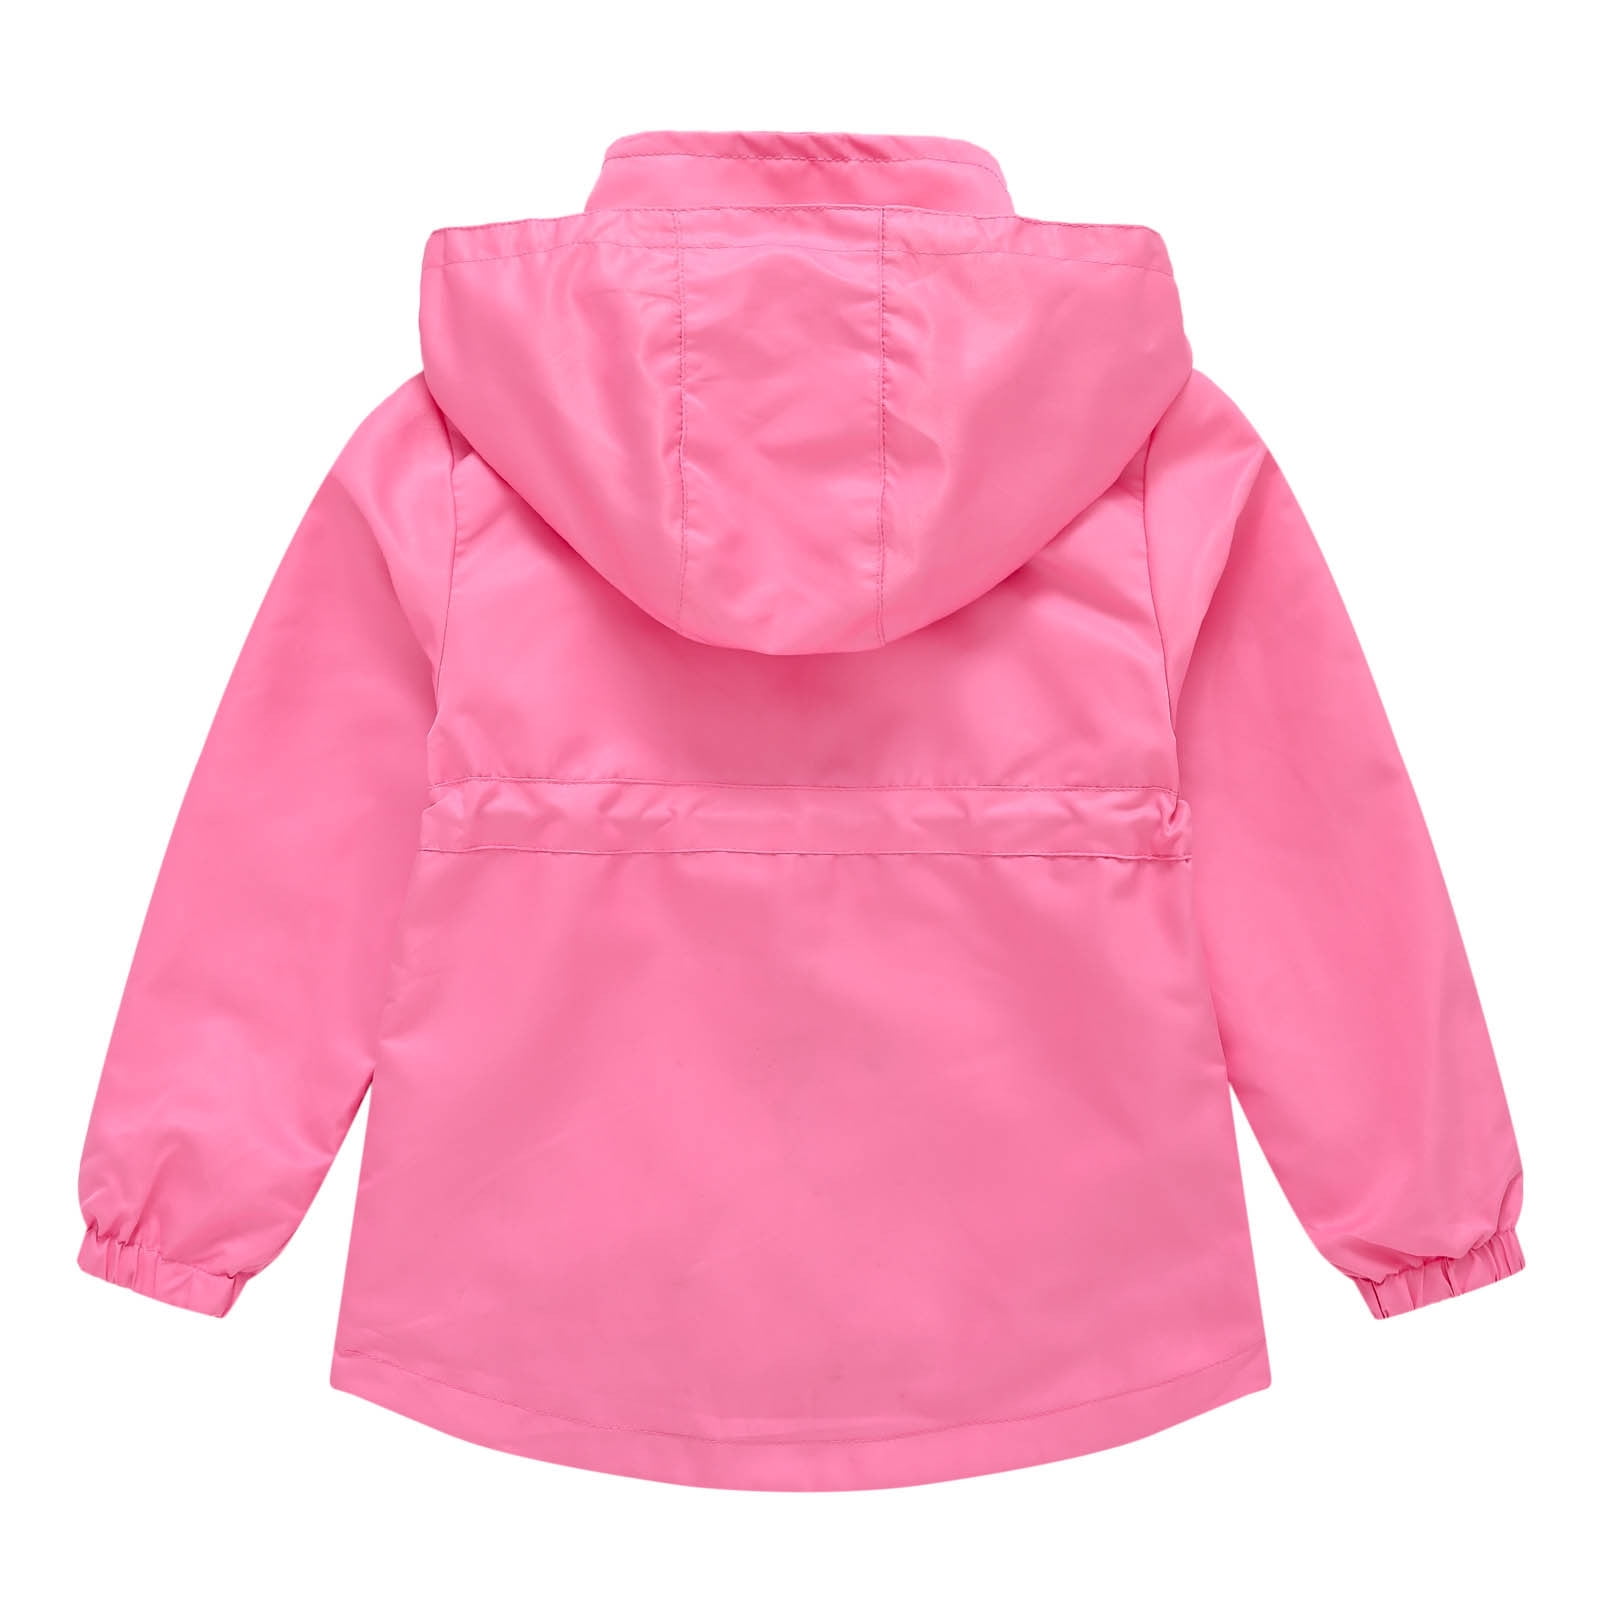 Aayomet Coats For Kids Girls Girls Outdoor Floral Lined Light Windproof ...